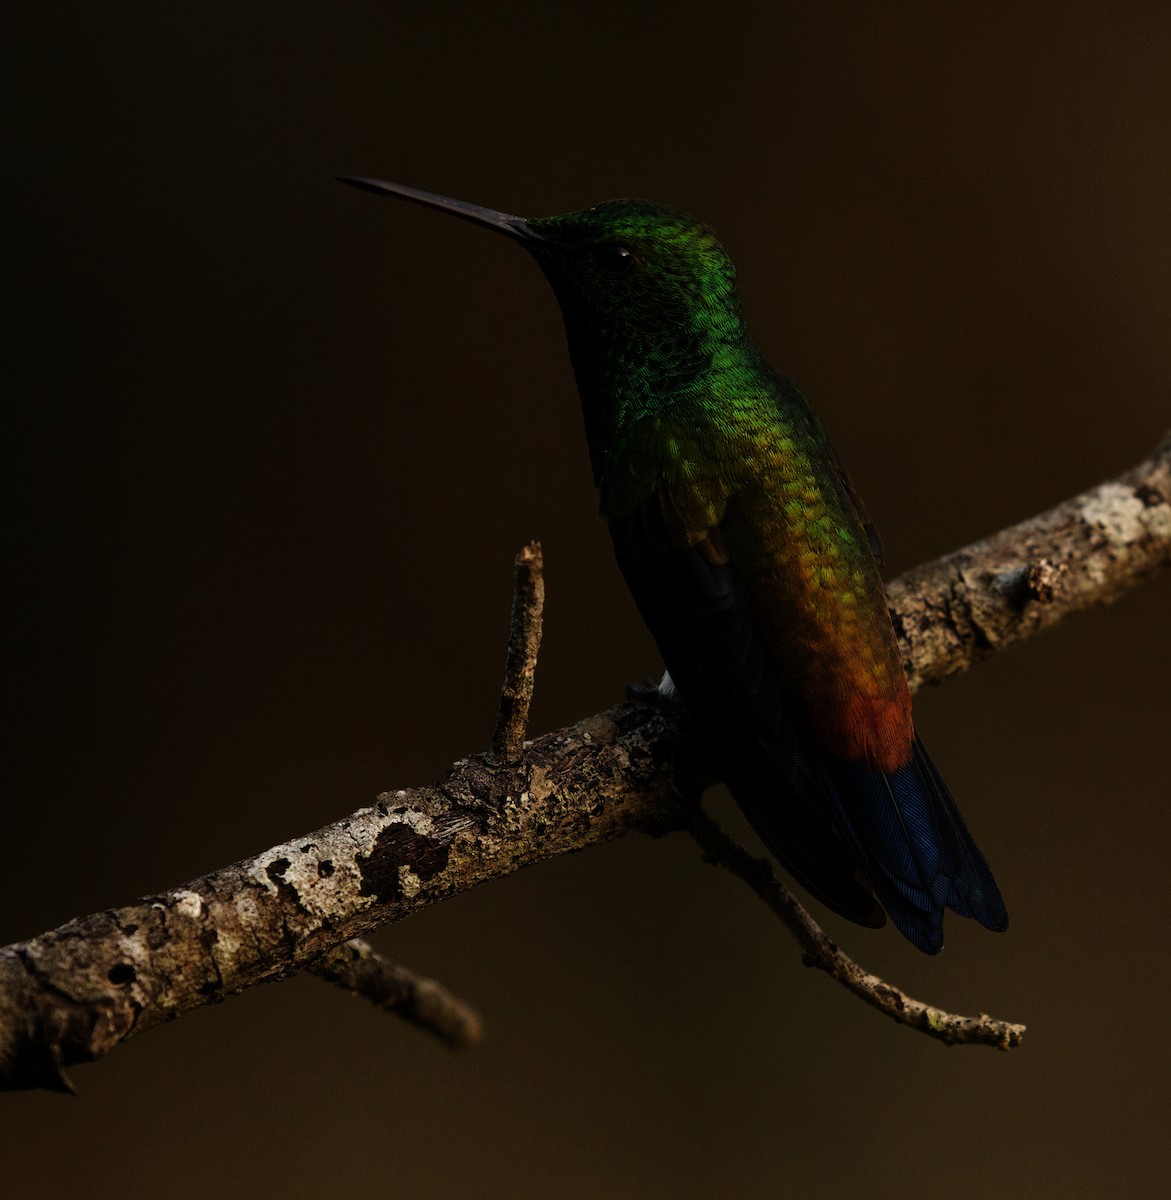 Copper-rumped Hummingbird - David Ascanio